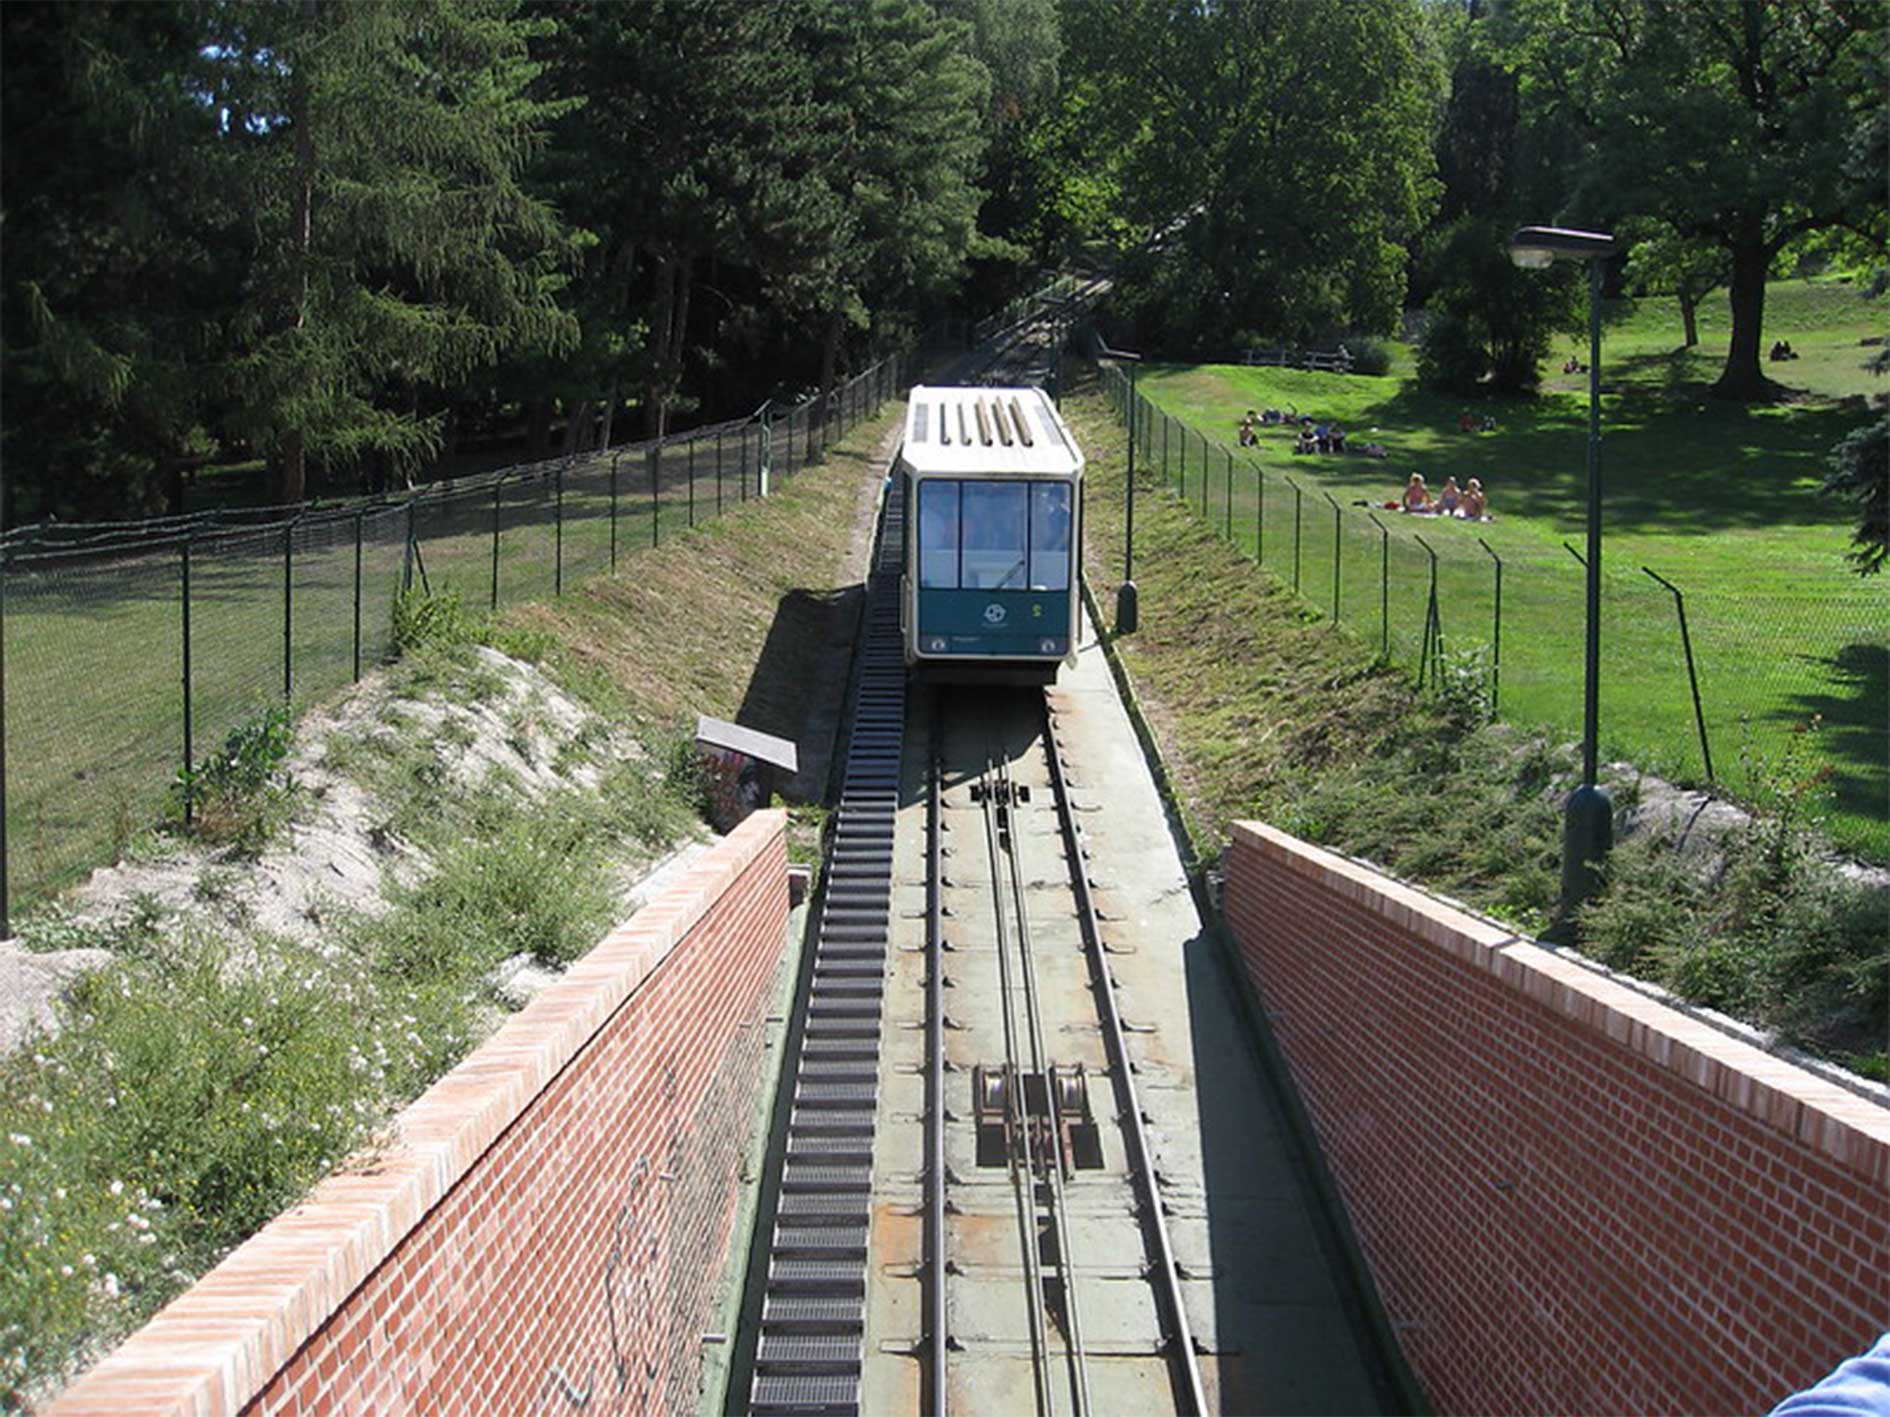 Tram-like funicular on Petrin hill